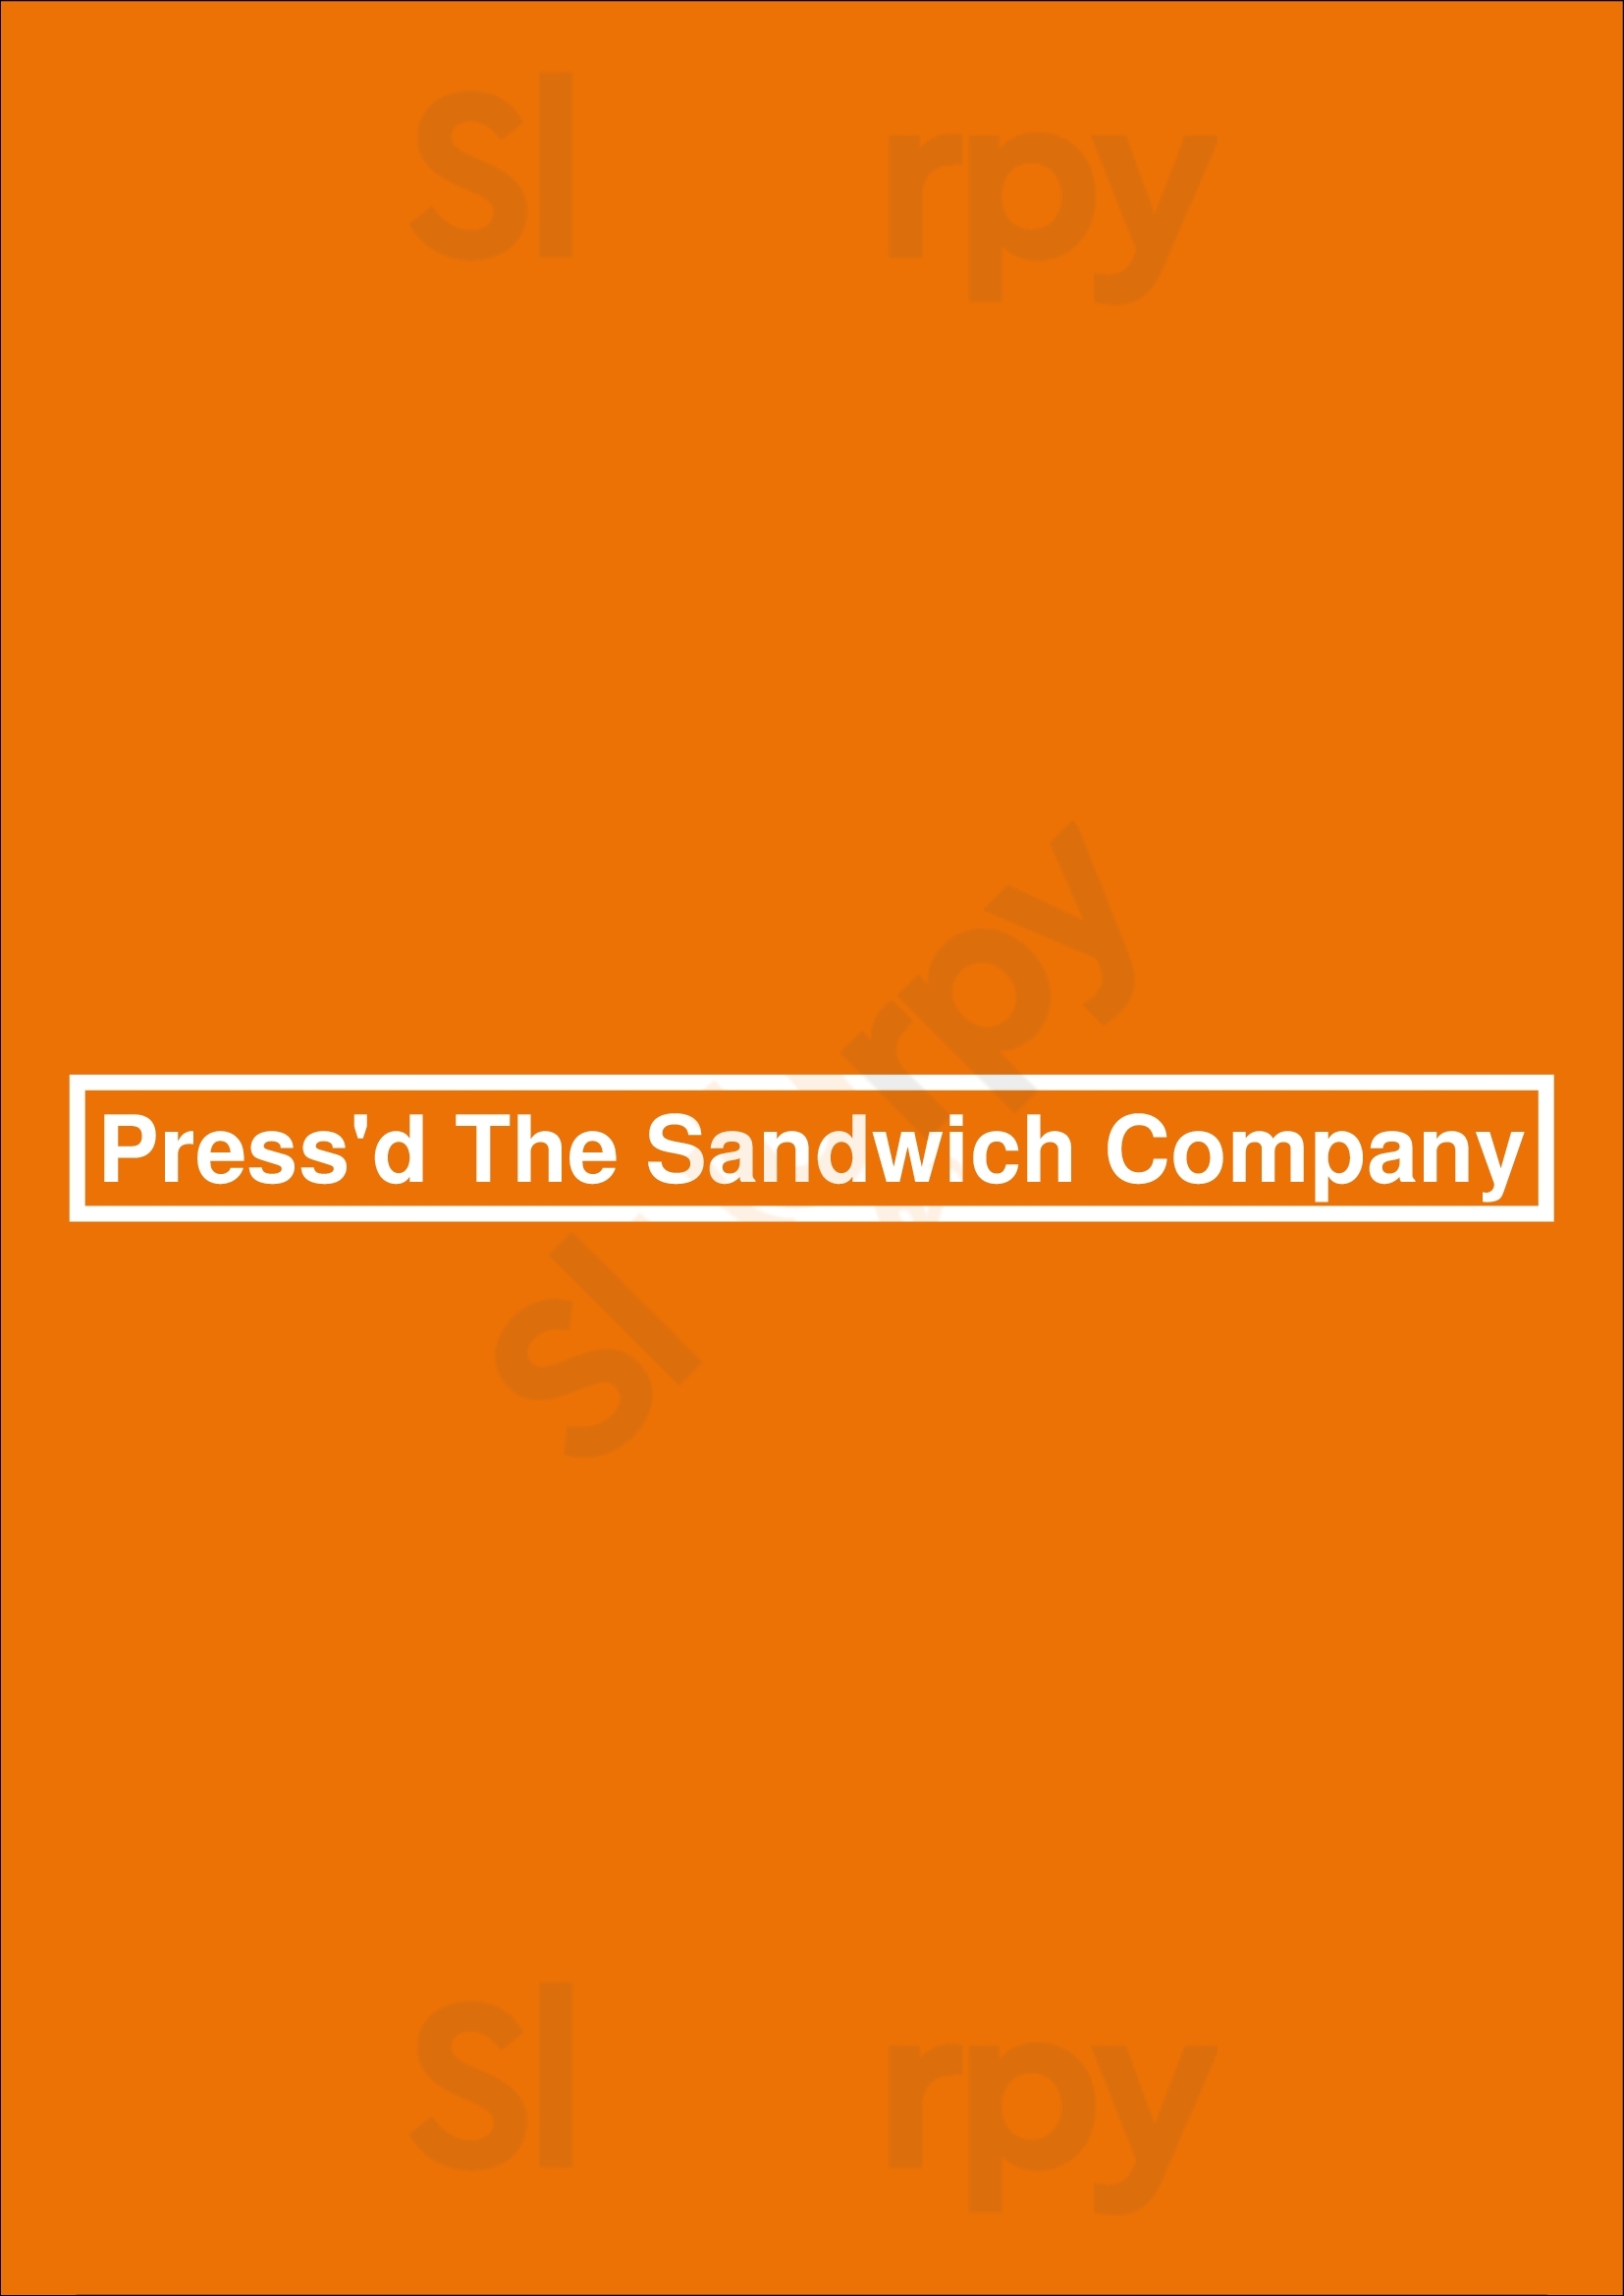 Press'd The Sandwich Company Edmonton Menu - 1